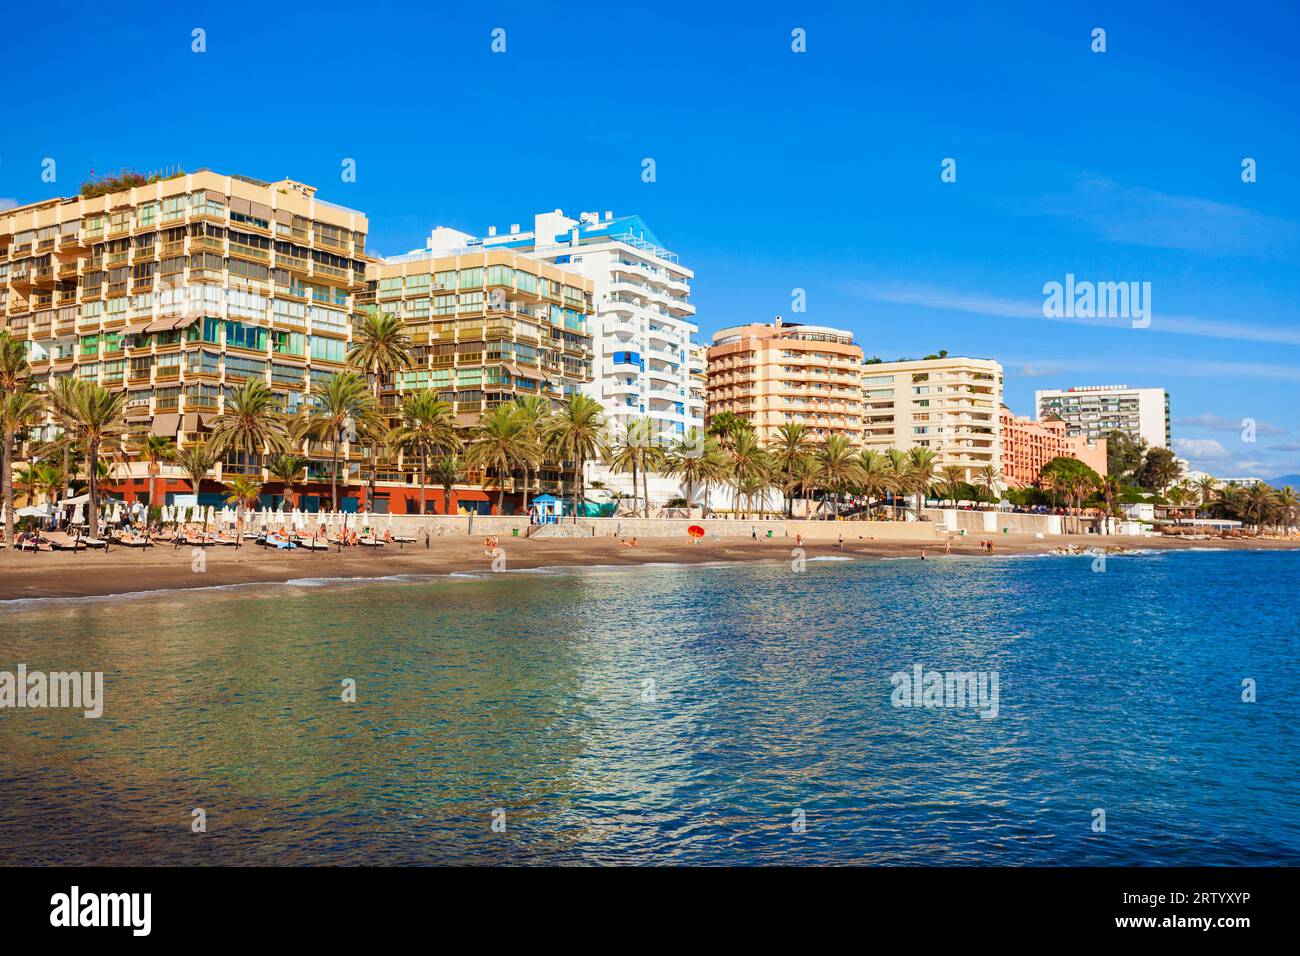 Plage de Marbella. Marbella est une ville de la province de Malaga en Andalousie, Espagne. Banque D'Images